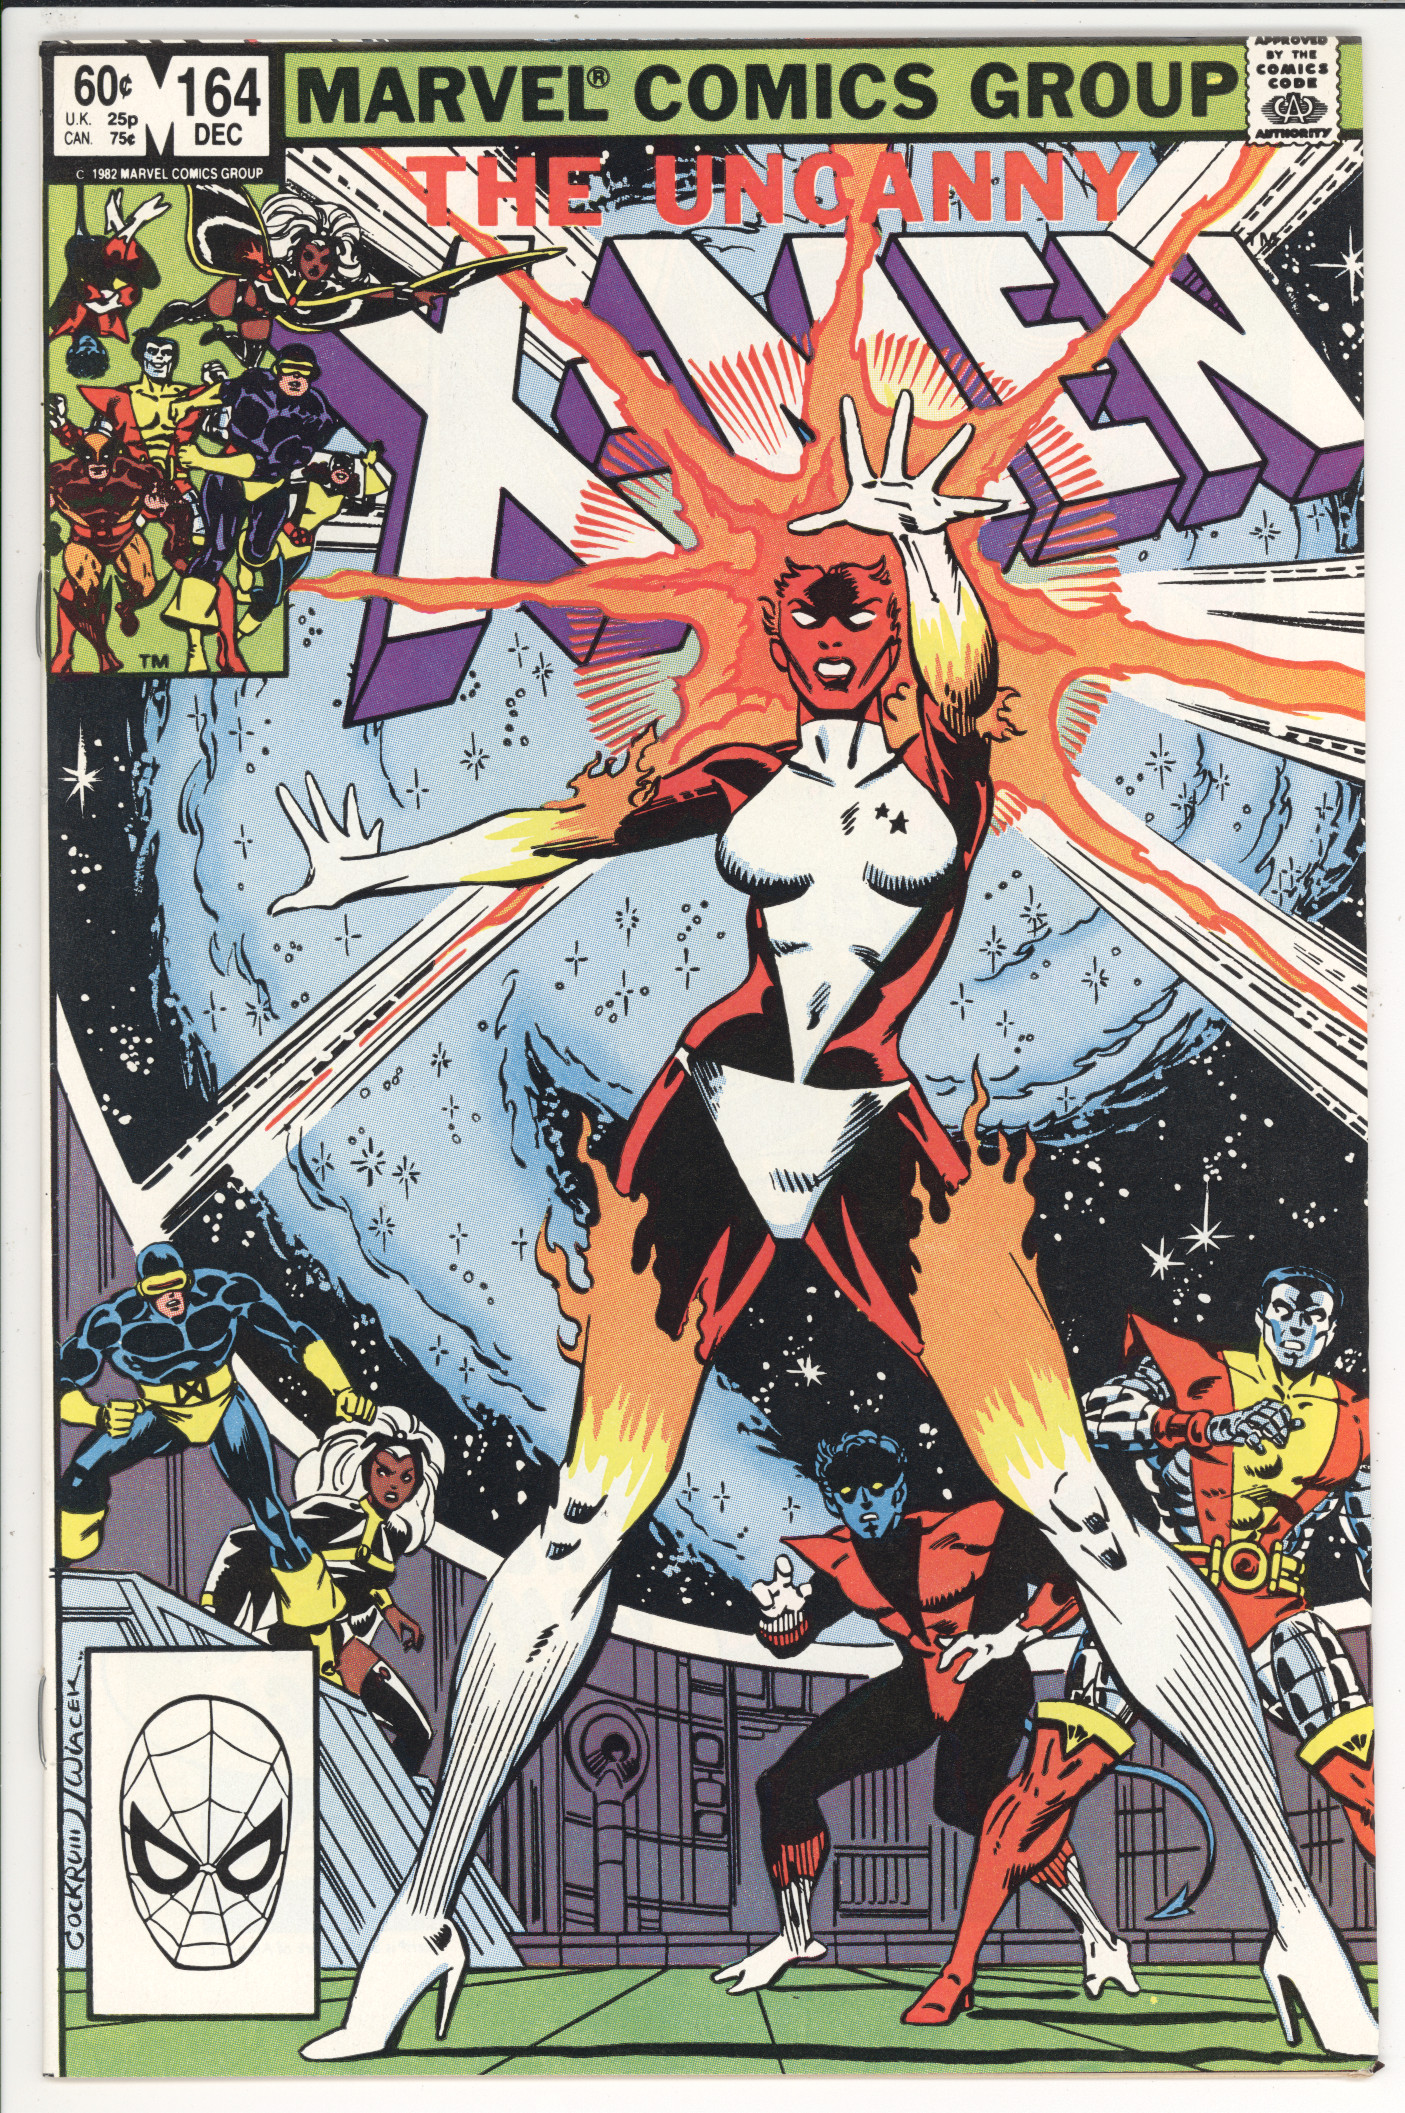 Uncanny X-Men #164